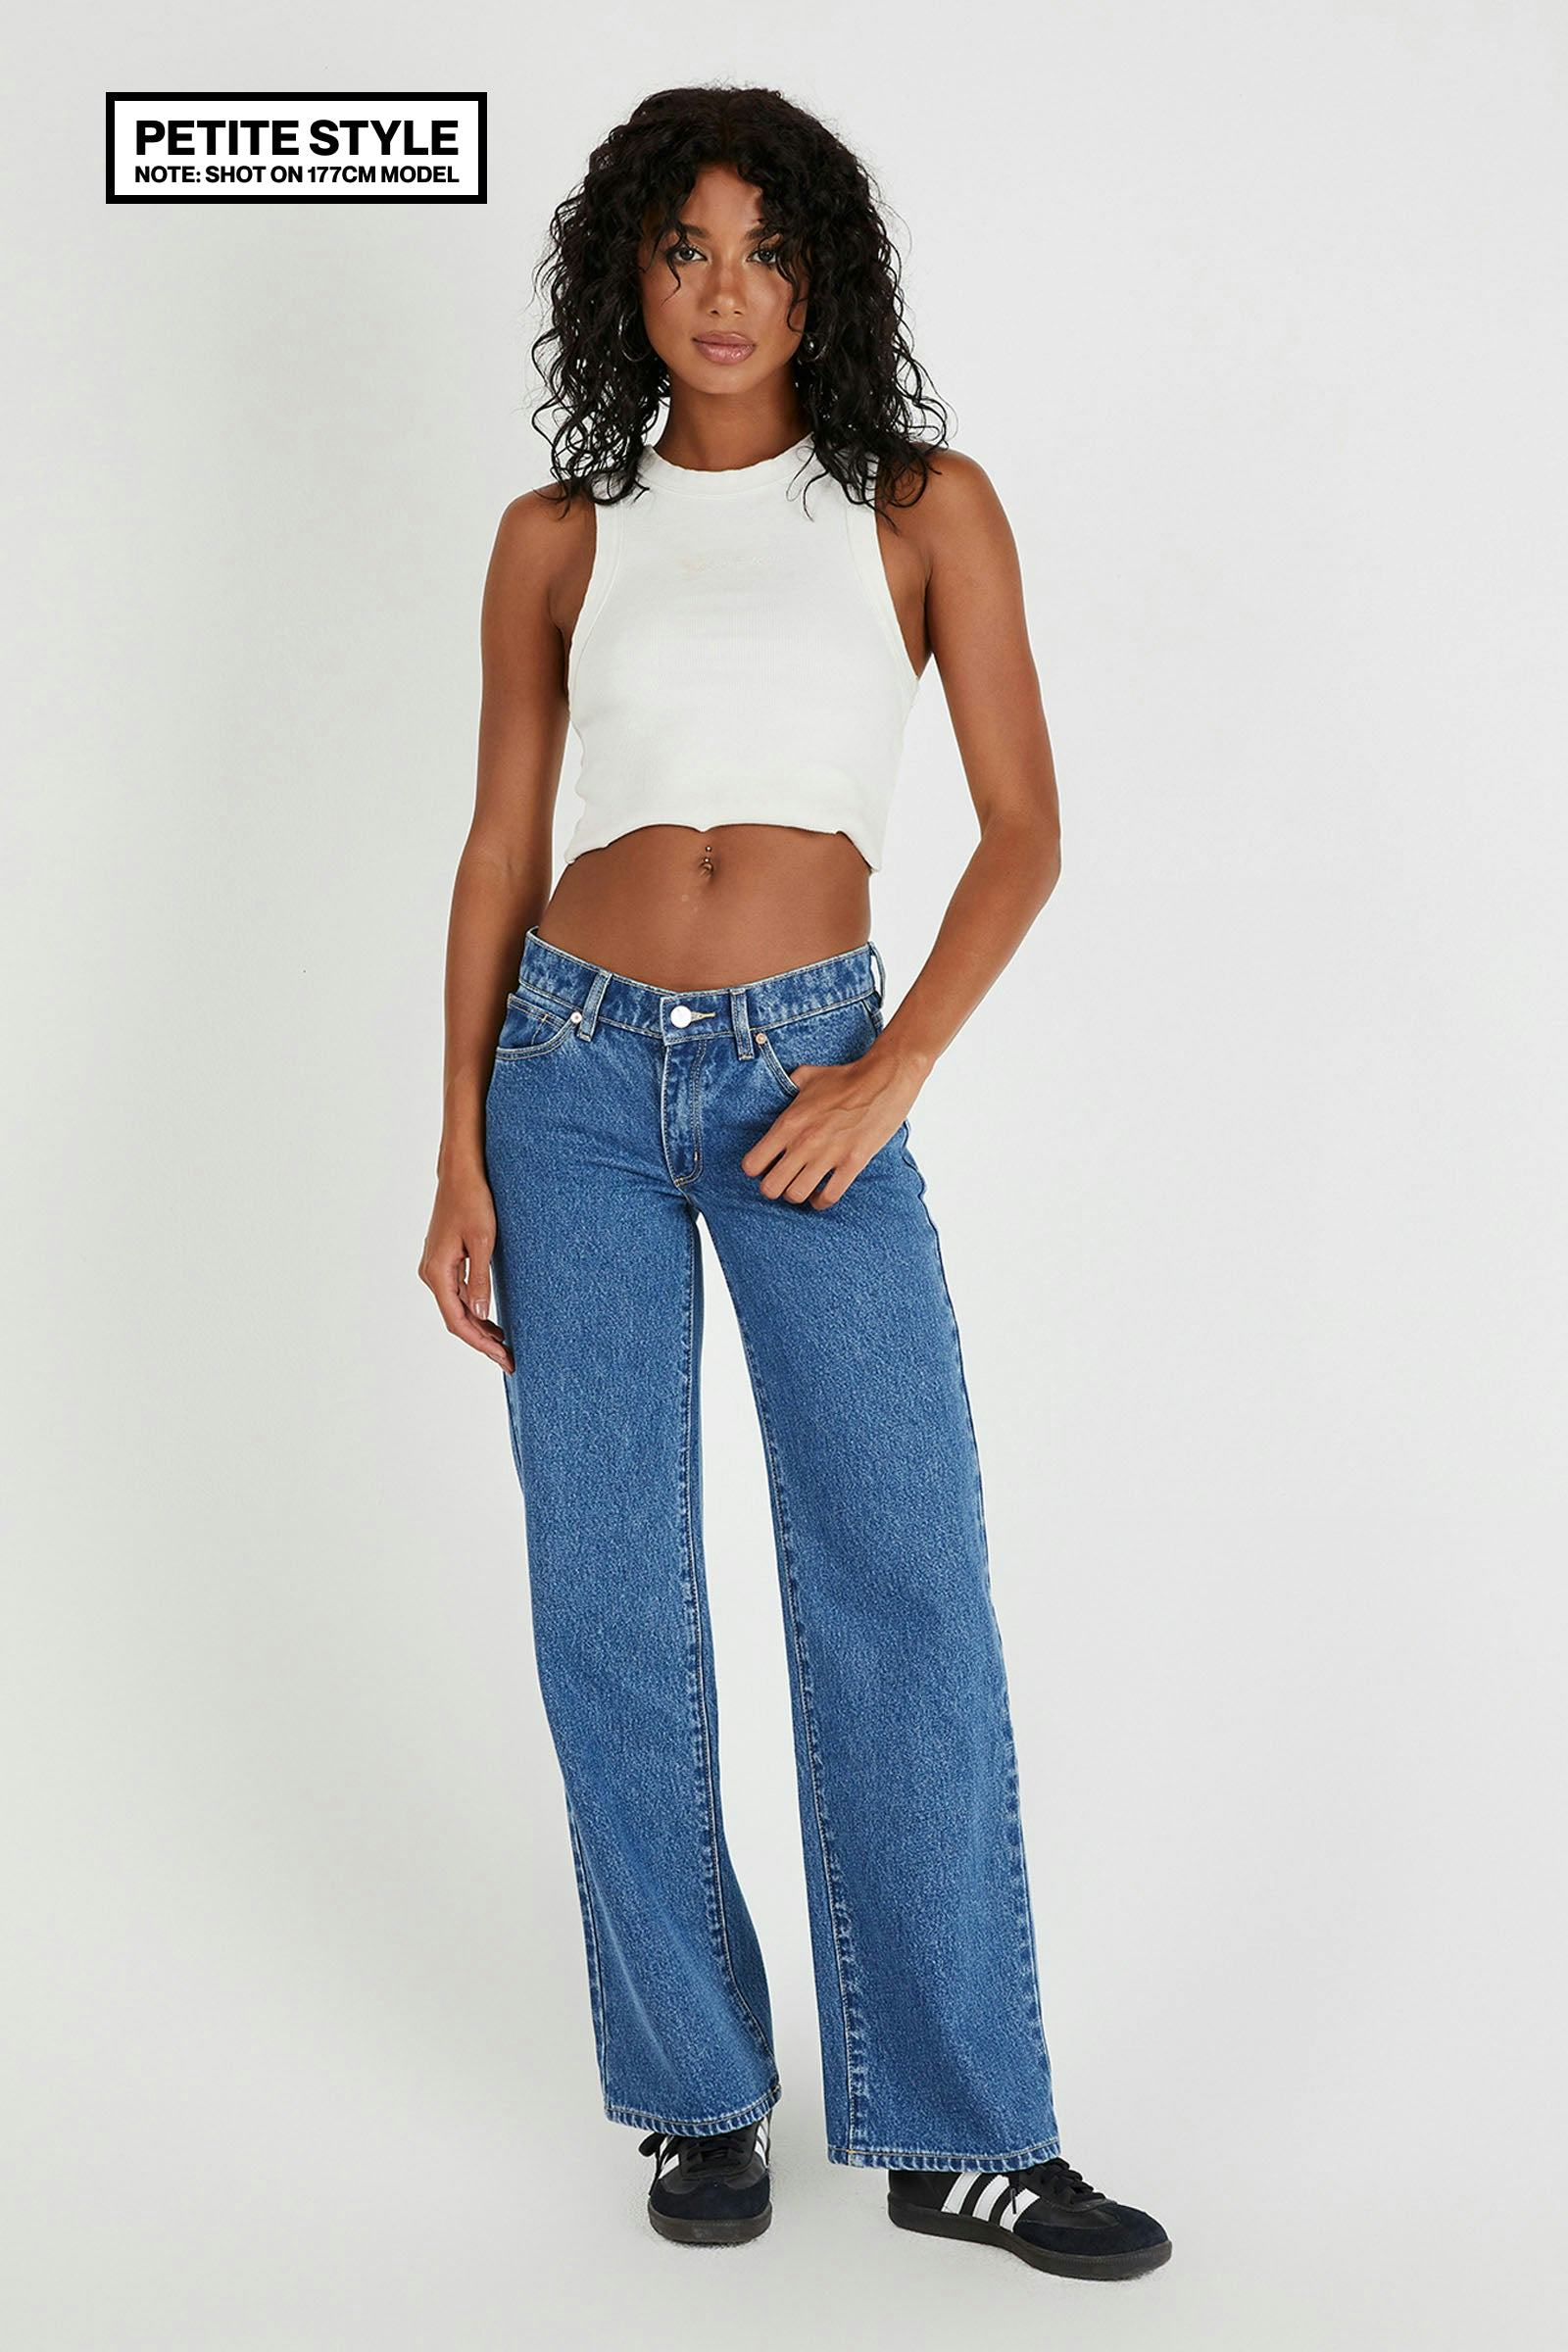 Buy Women's Petite Jeans Online